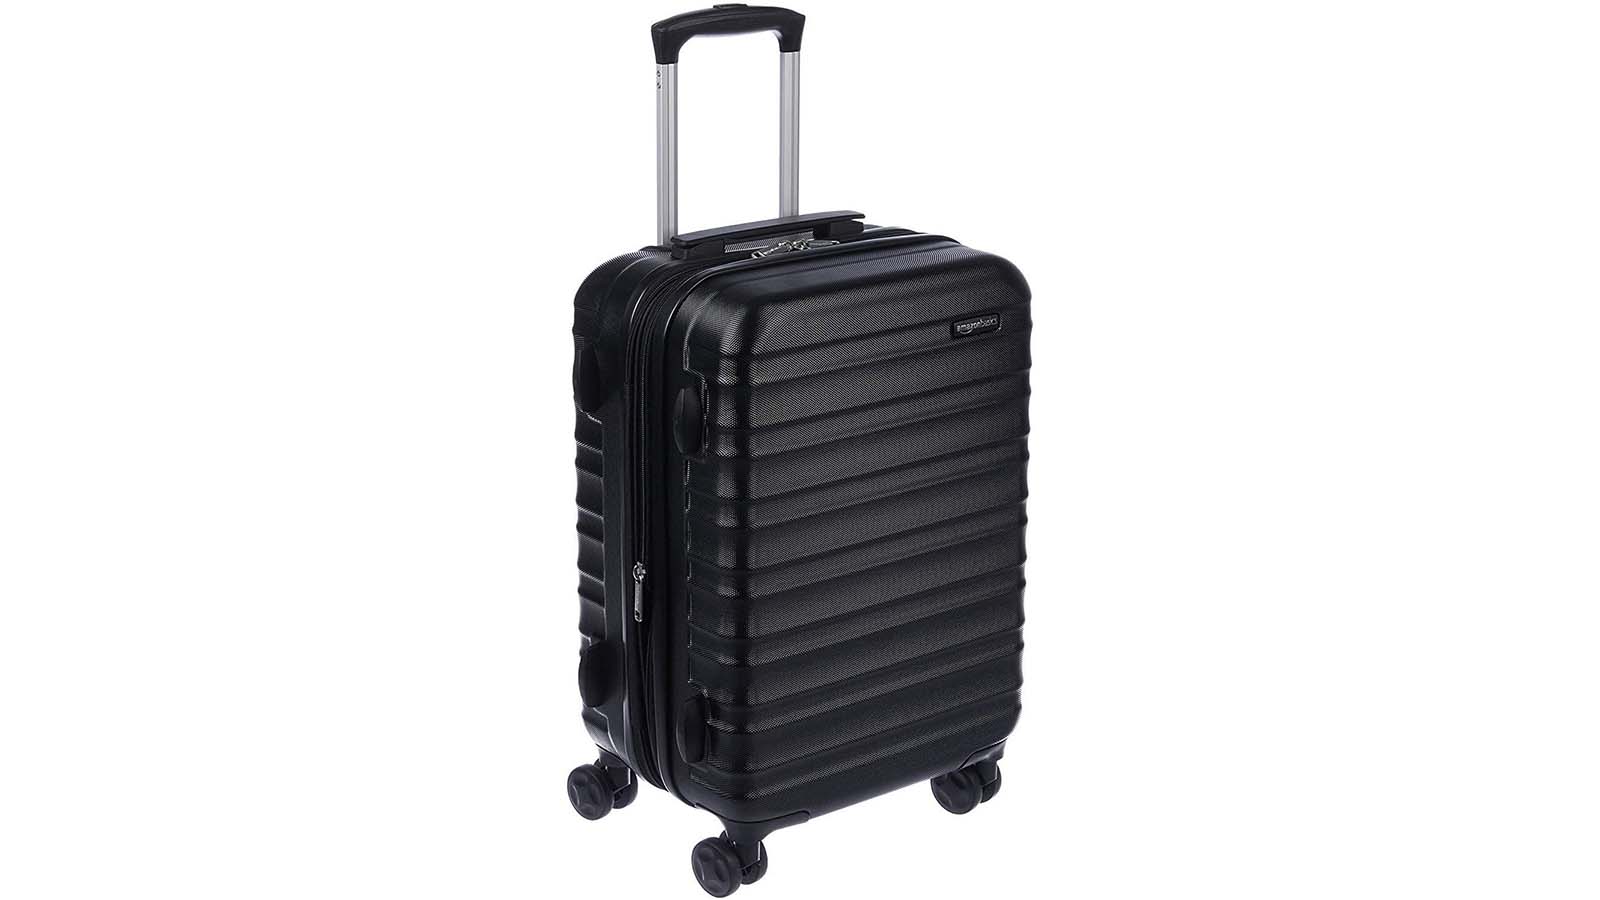 21 International Carry-On Luggage, Maximum Size For Flight